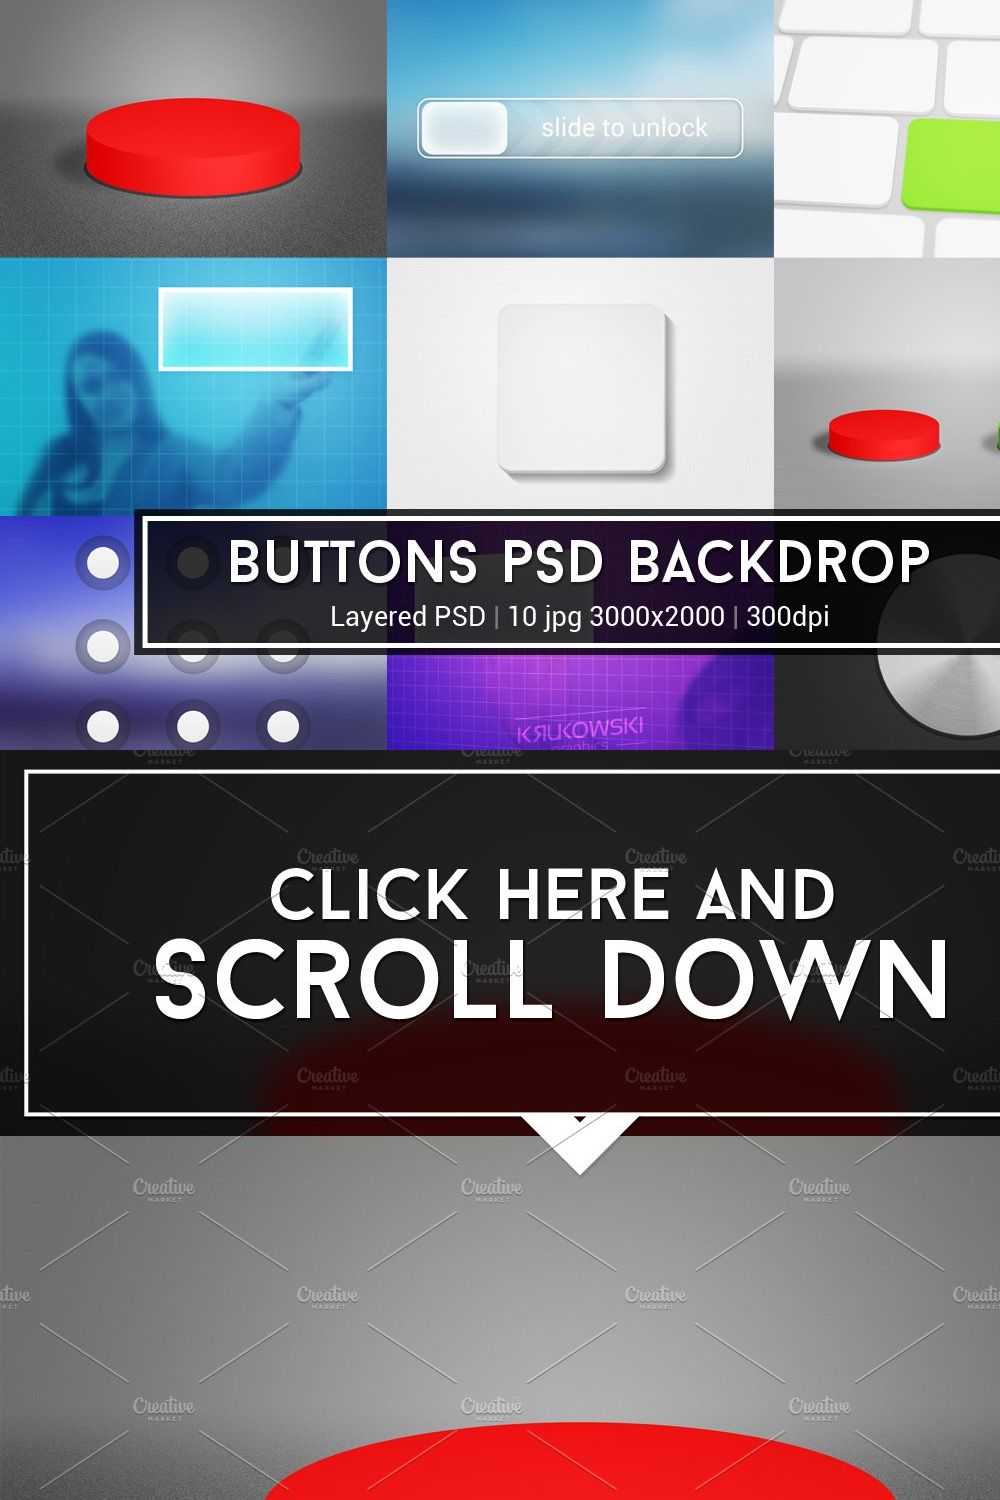 Buttons PSD Backdrop pinterest preview image.